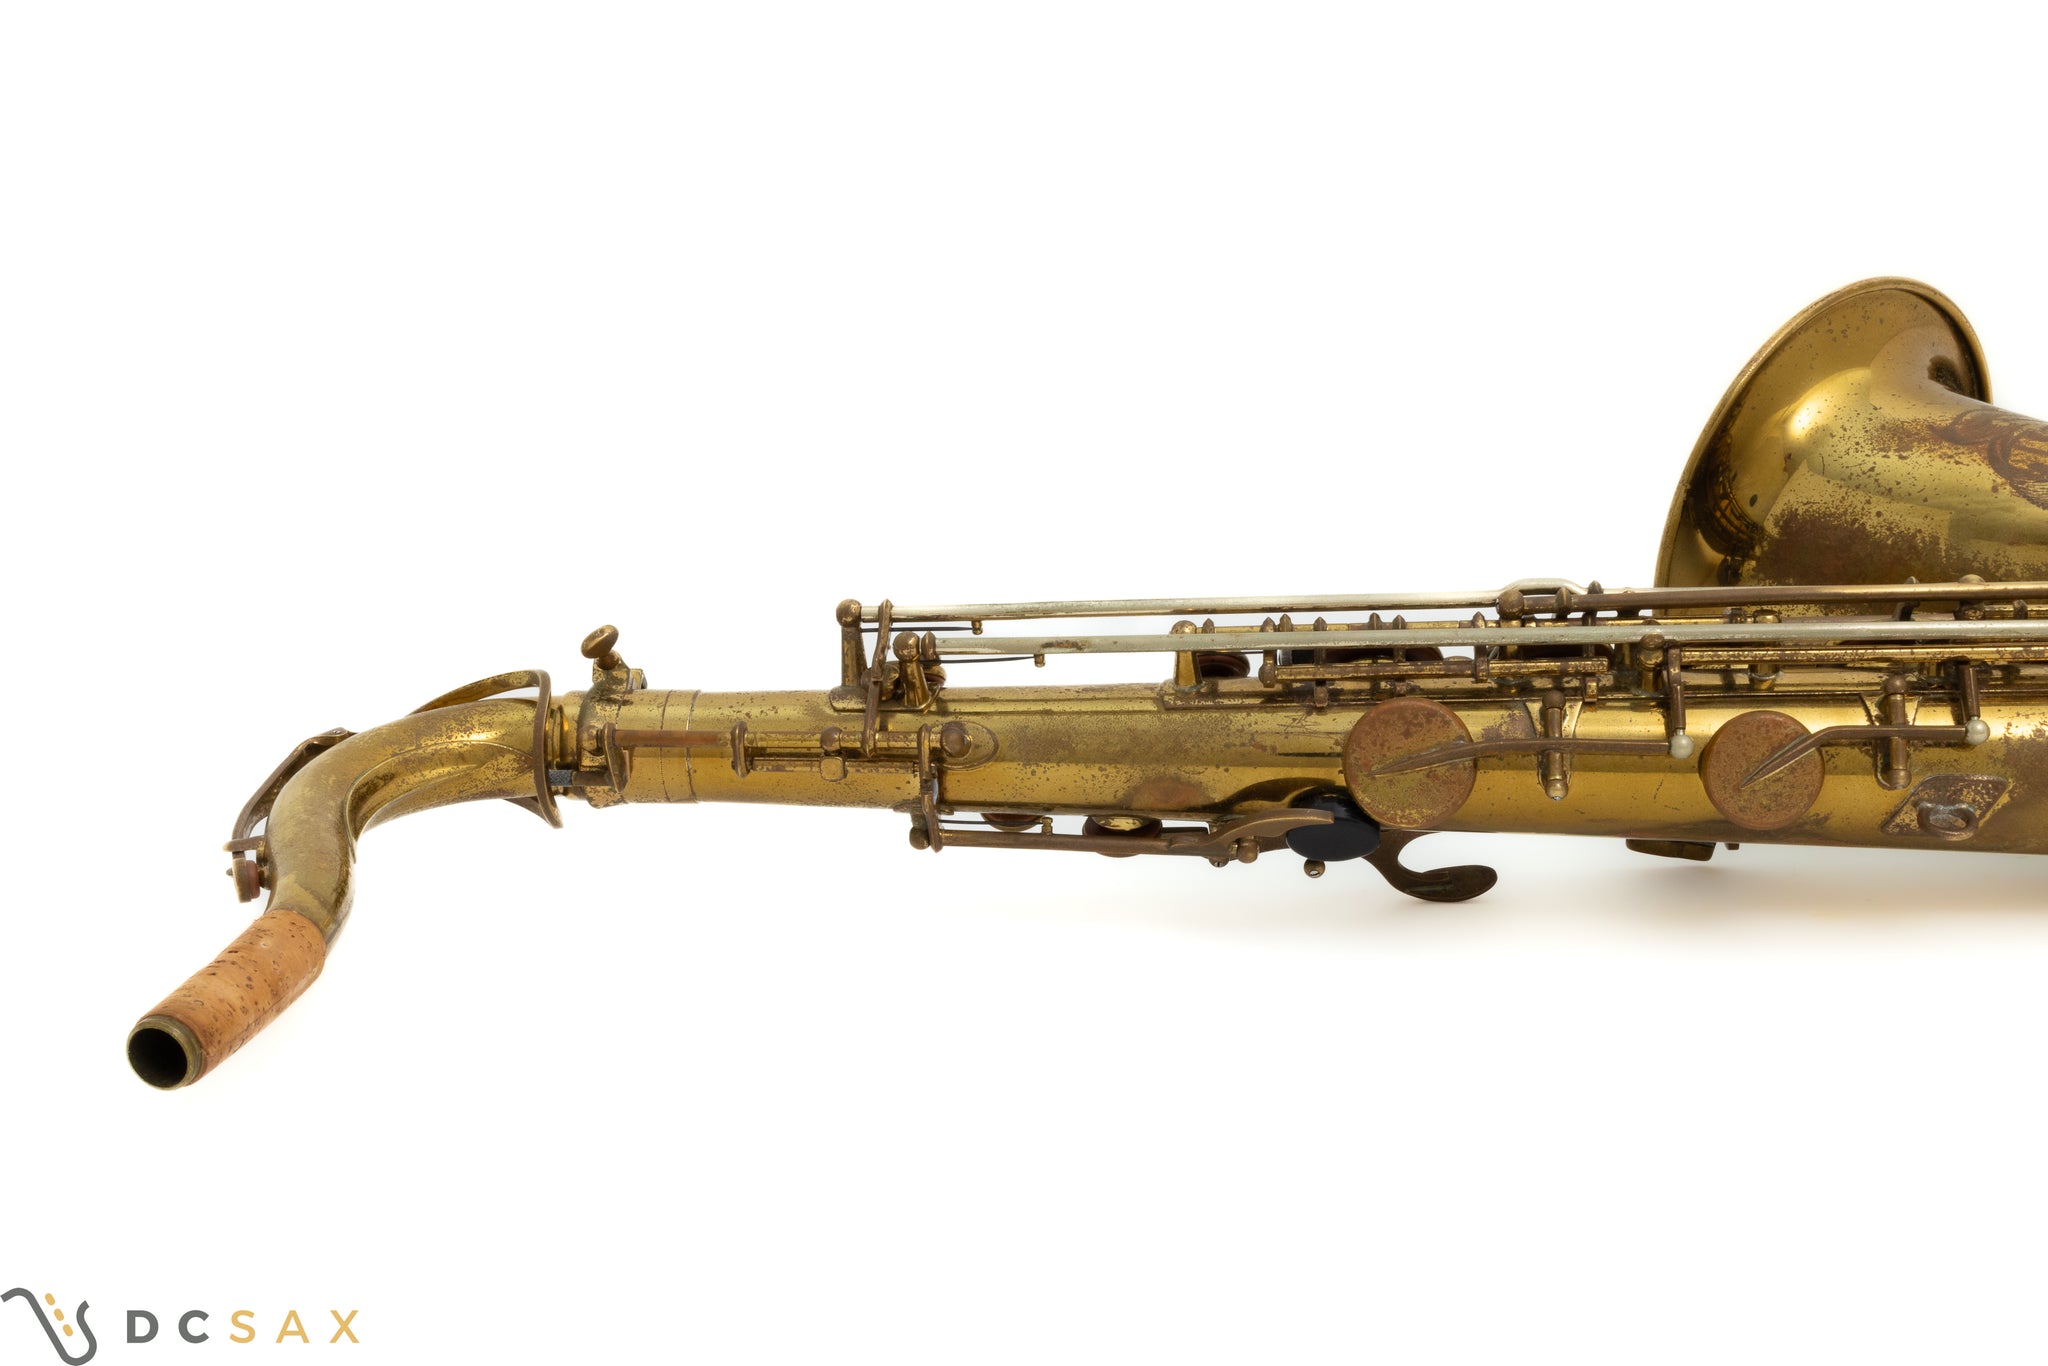 135,xxx Selmer Mark VI Tenor Saxophone, Varitone Model, Orig Lacquer, Overhaul, Video